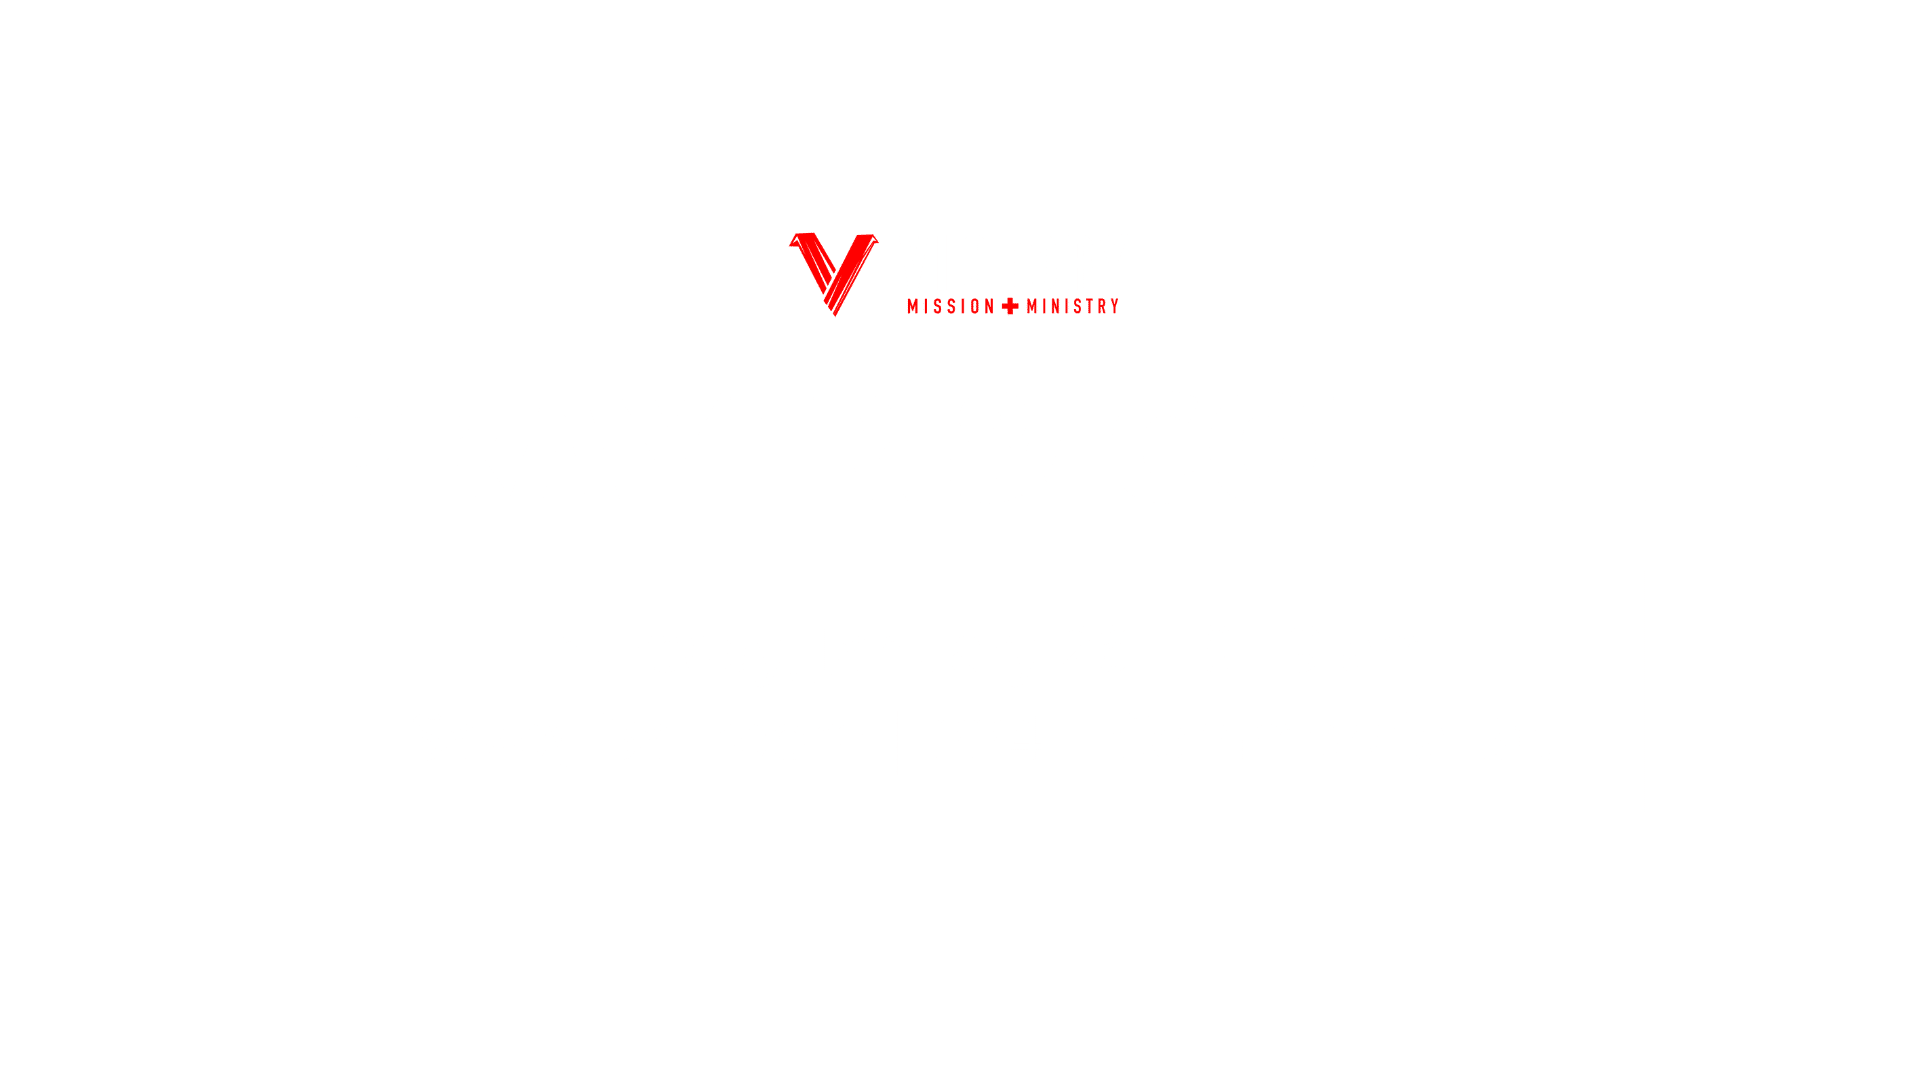 Prayer & Coffee Thursday, January 26, 2023, 8-9am, Savoy Ballroom, 224 E Commercial Street.